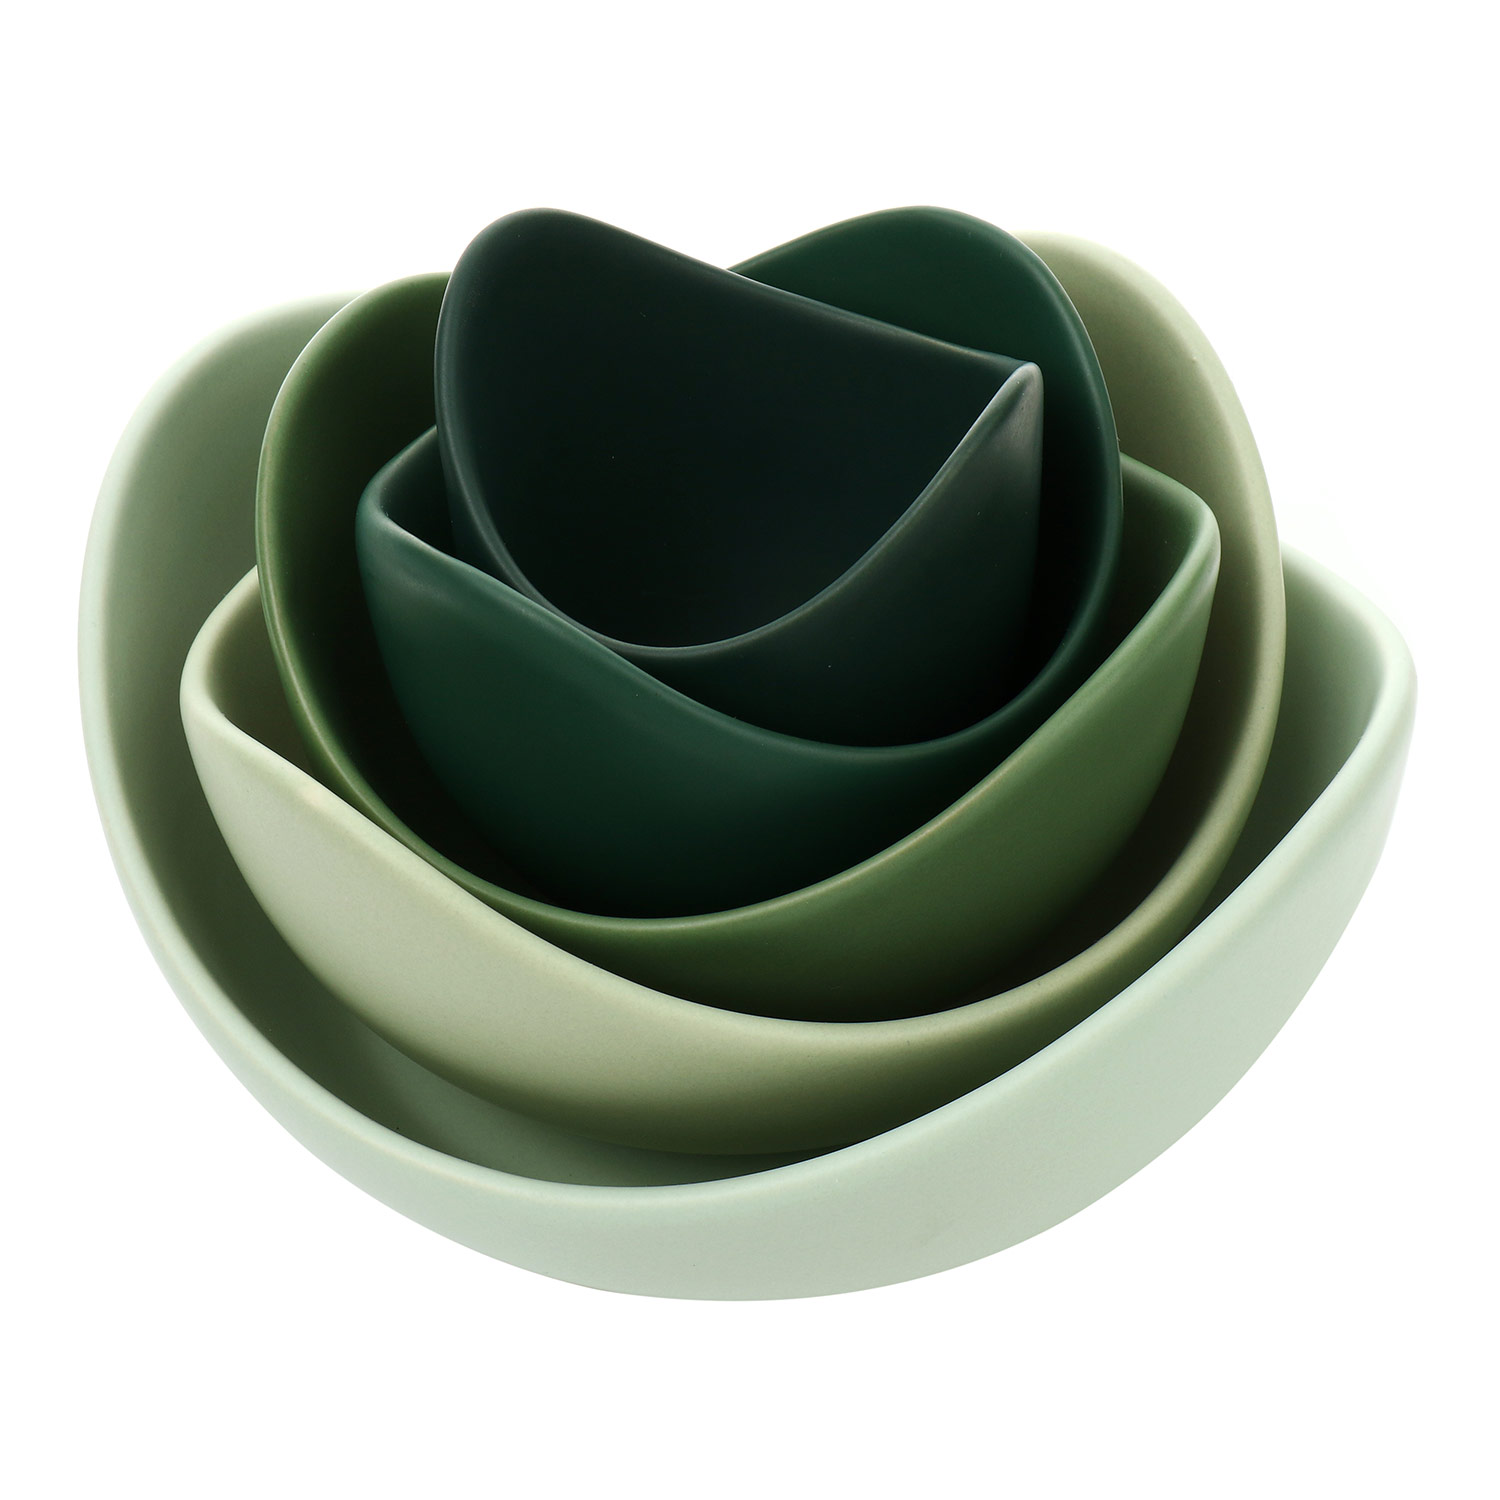 Mint green lotus-5 piece set